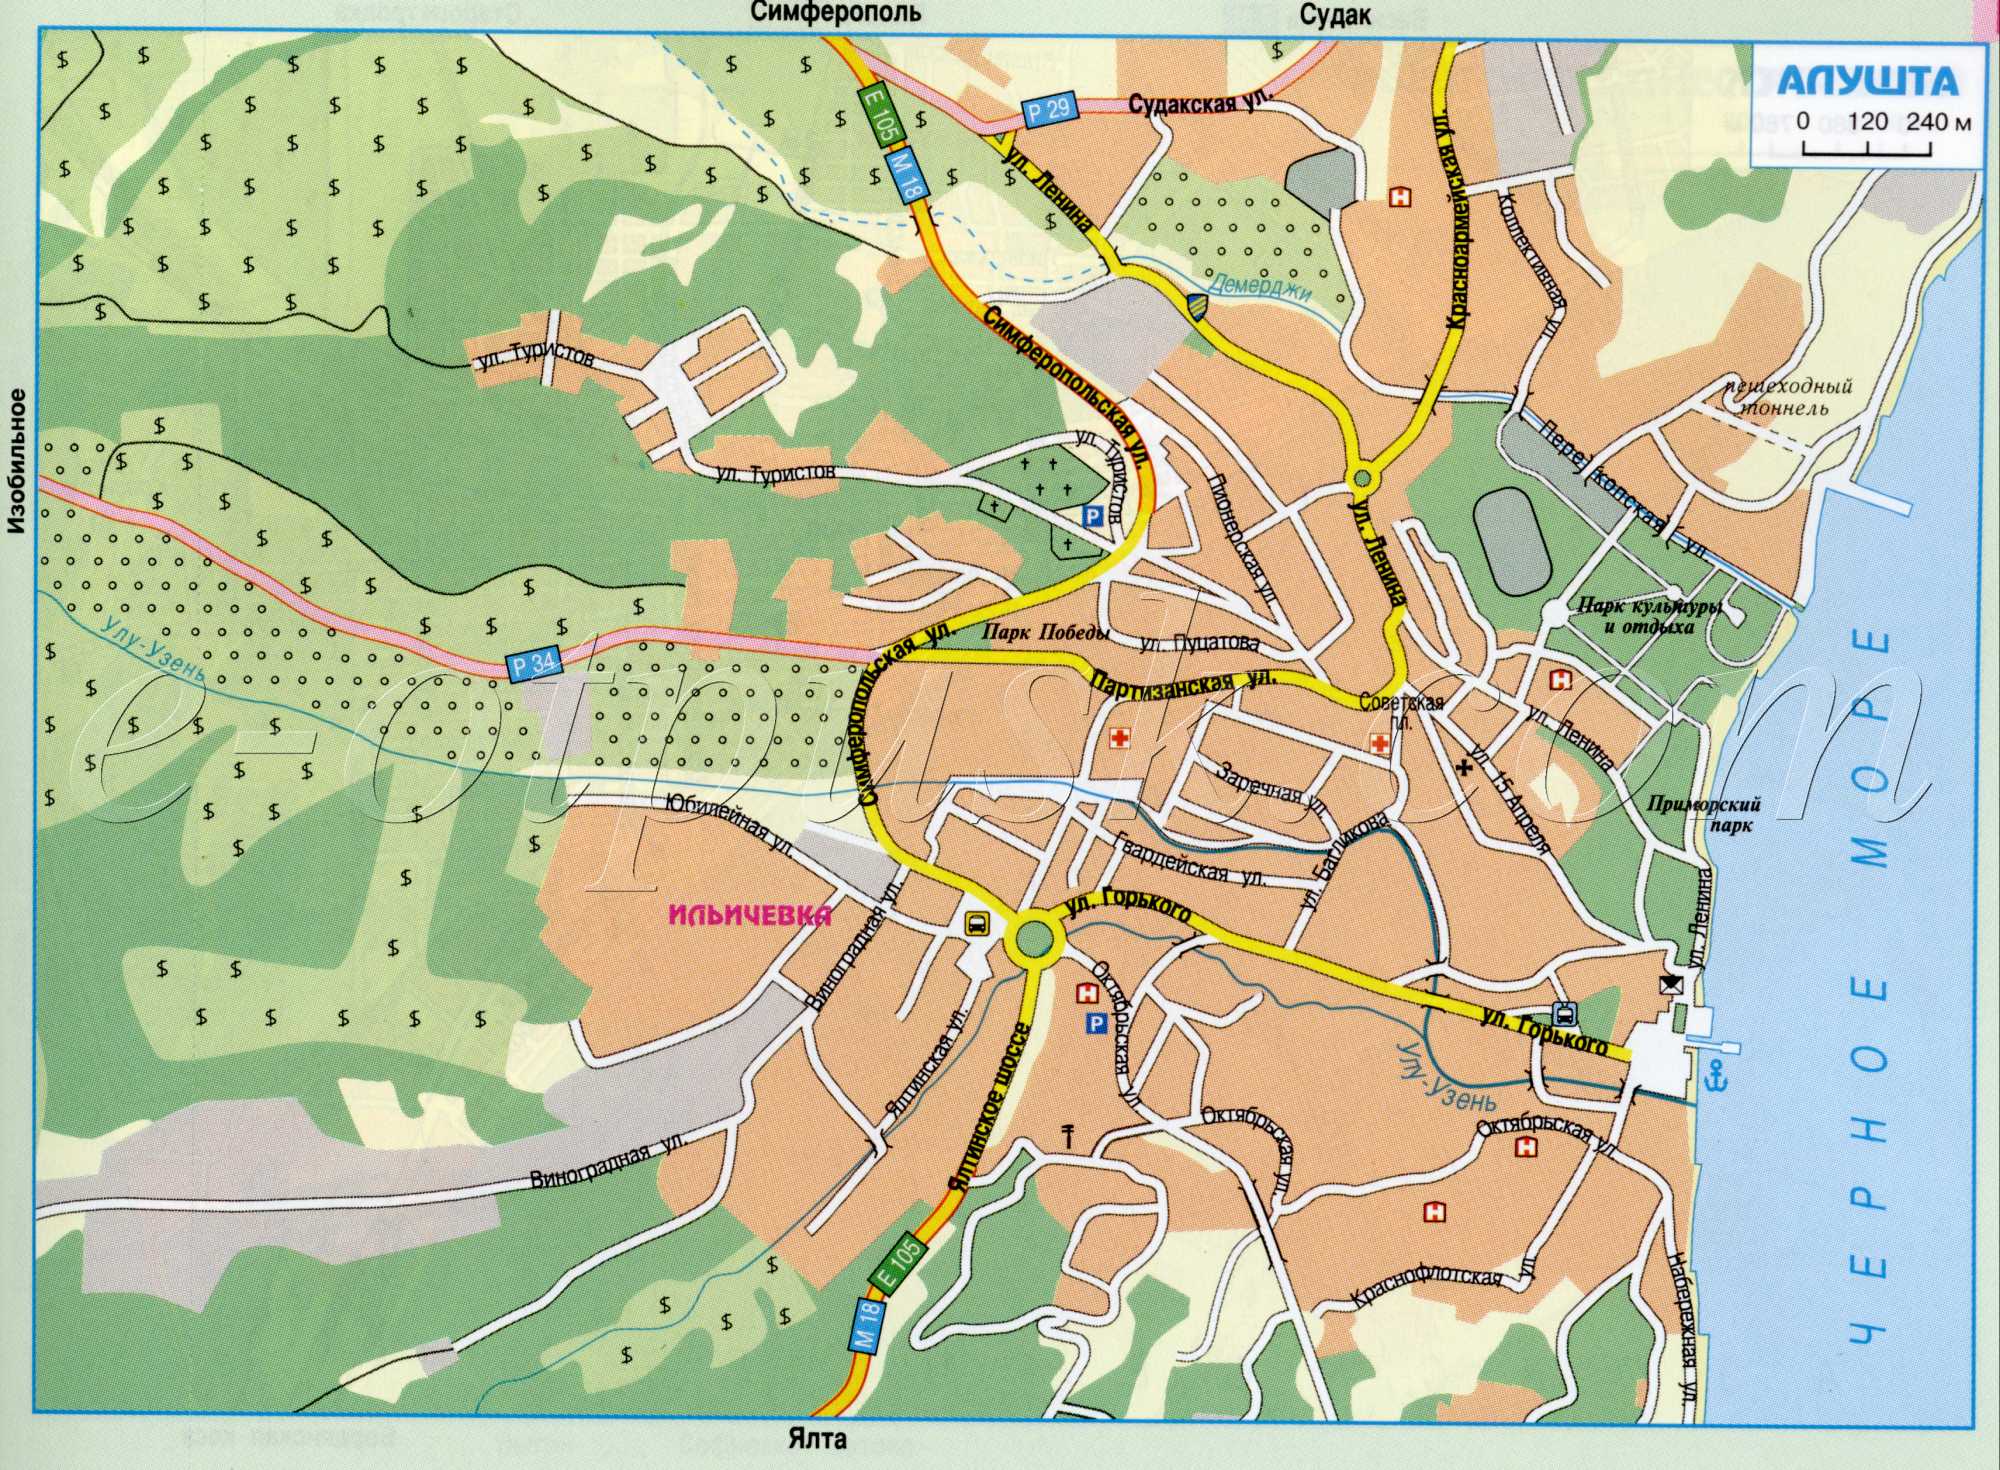 Map of Alushta. Map of auto roads of the city of Alushta, Crimea. download for free